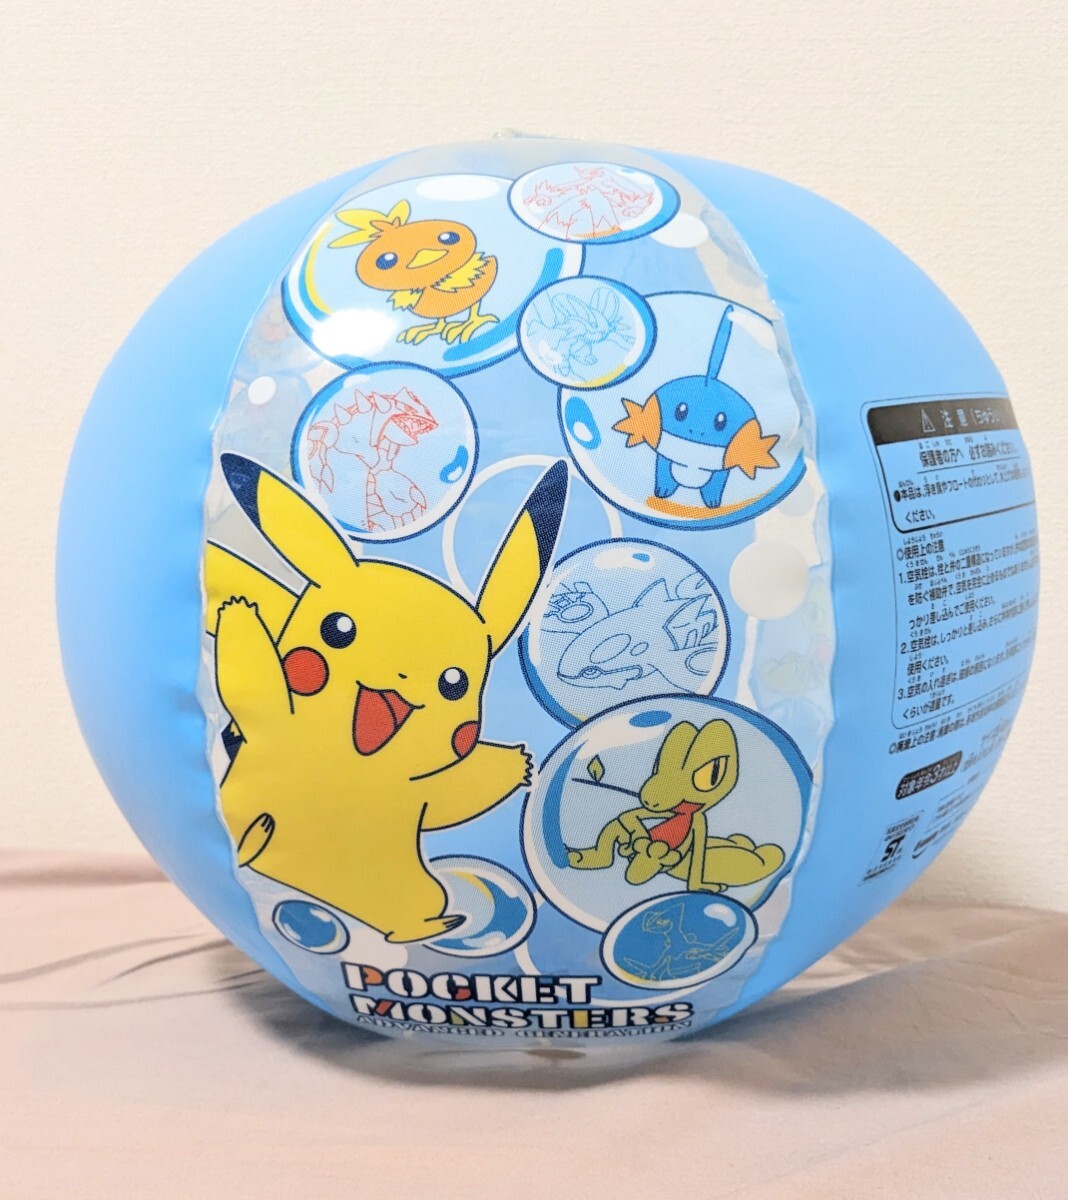  Pokemon пляжный мяч 40cm пустой bi воздух винил способ судно Inflatable Pokemon Beach Ball Pool Toy Rare Vintage